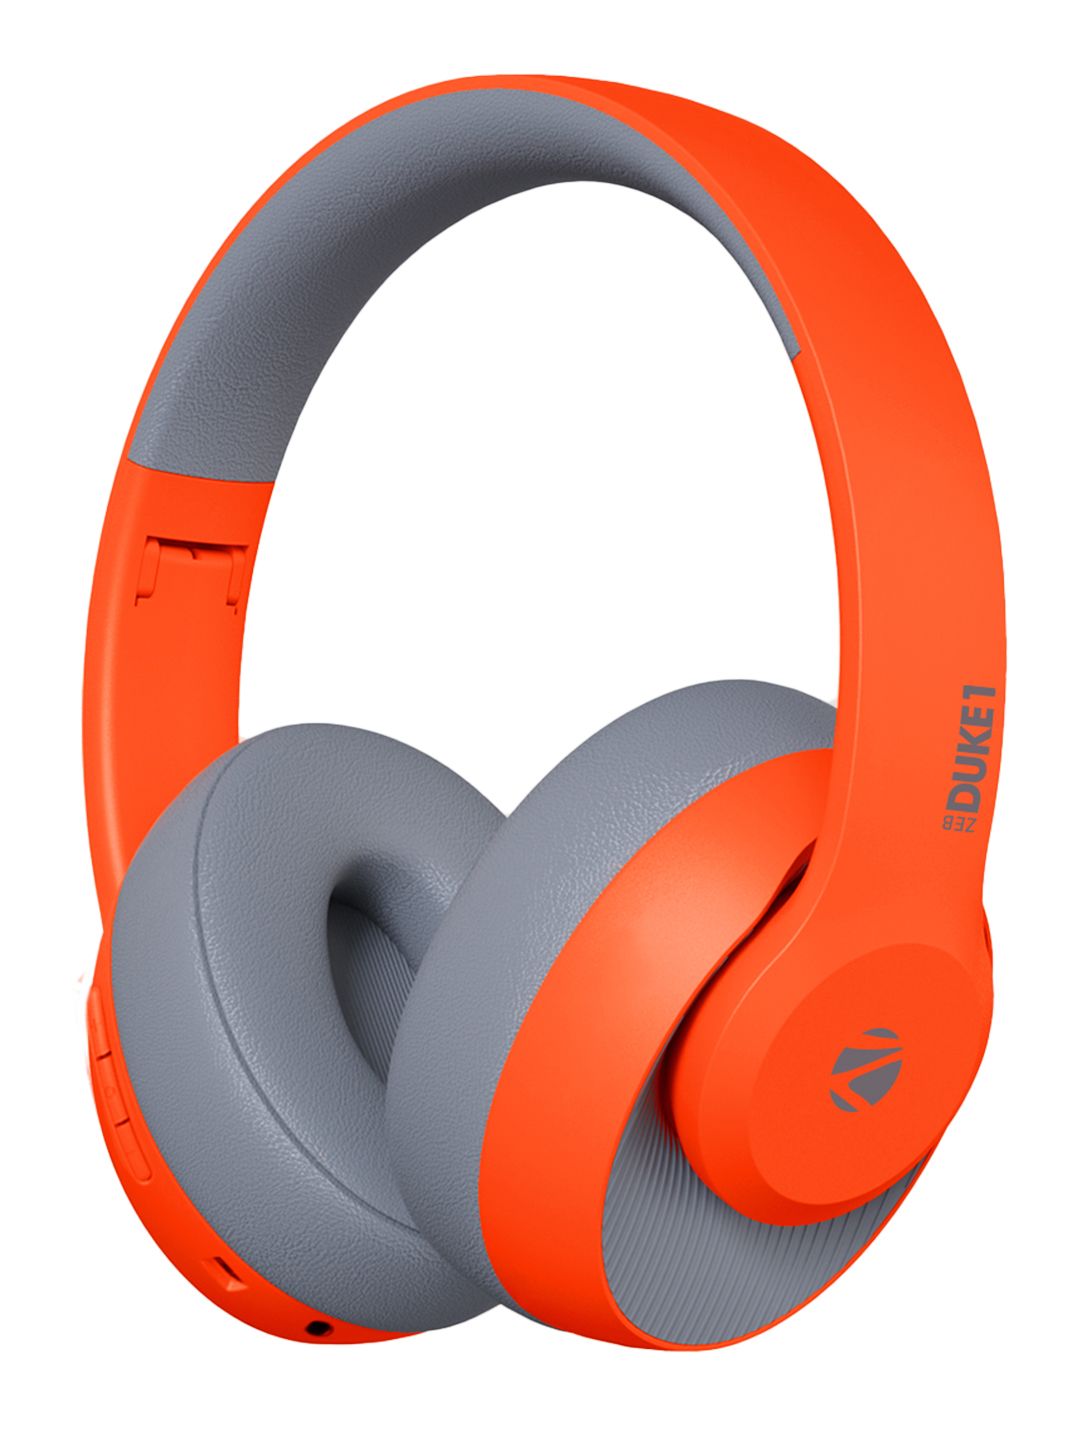 ZEBRONICS Zeb-DUKE1 Wireless Bluetooth 5.0 Over The Ear Headphone -Orange & Grey Price in India